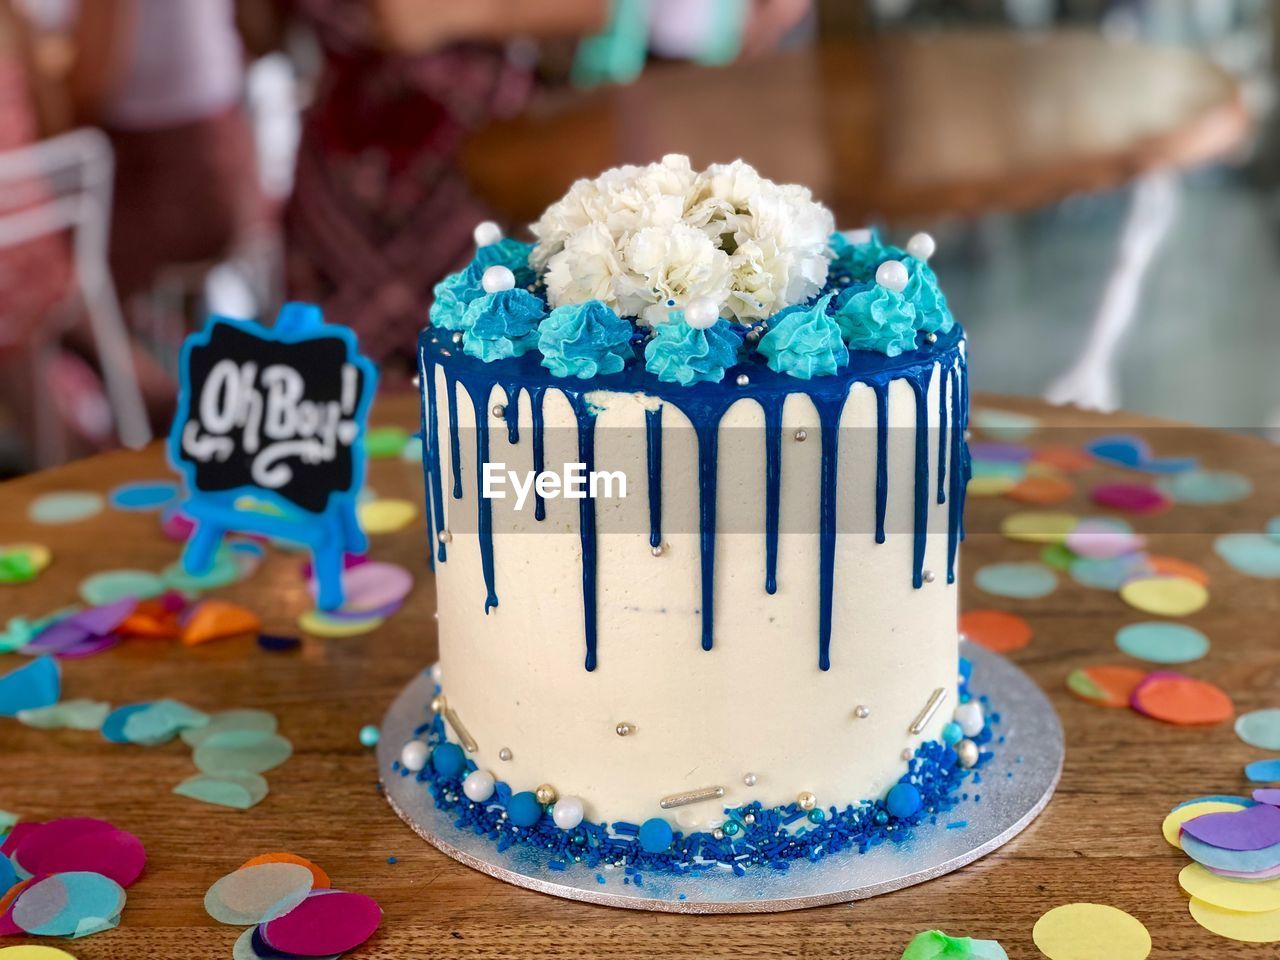 CLOSE-UP OF CAKE WITH ICE CREAM